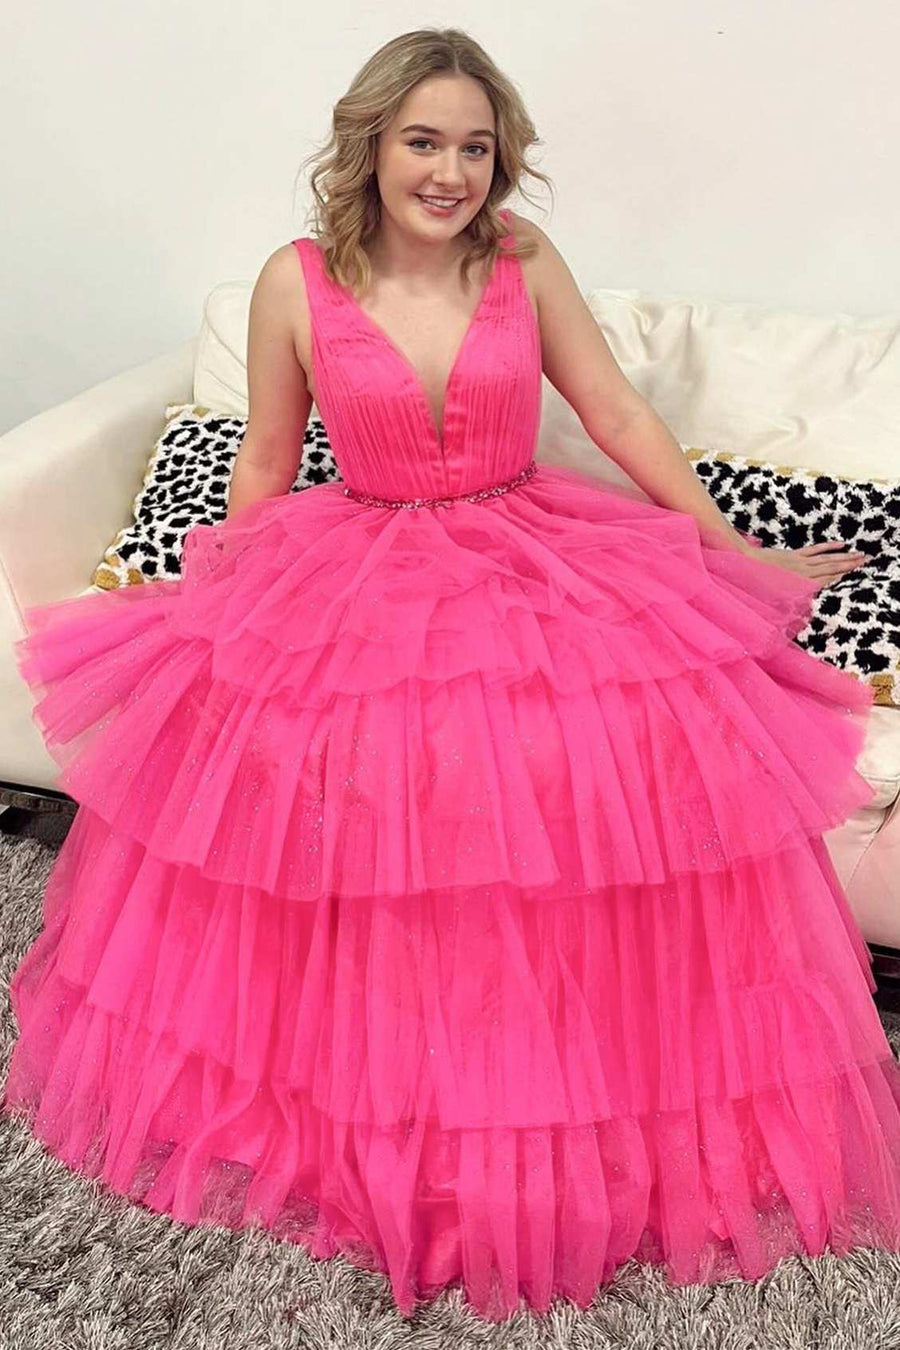 Hot Pink V-Neck Backless Belted Tiered A-Line Prom Dress